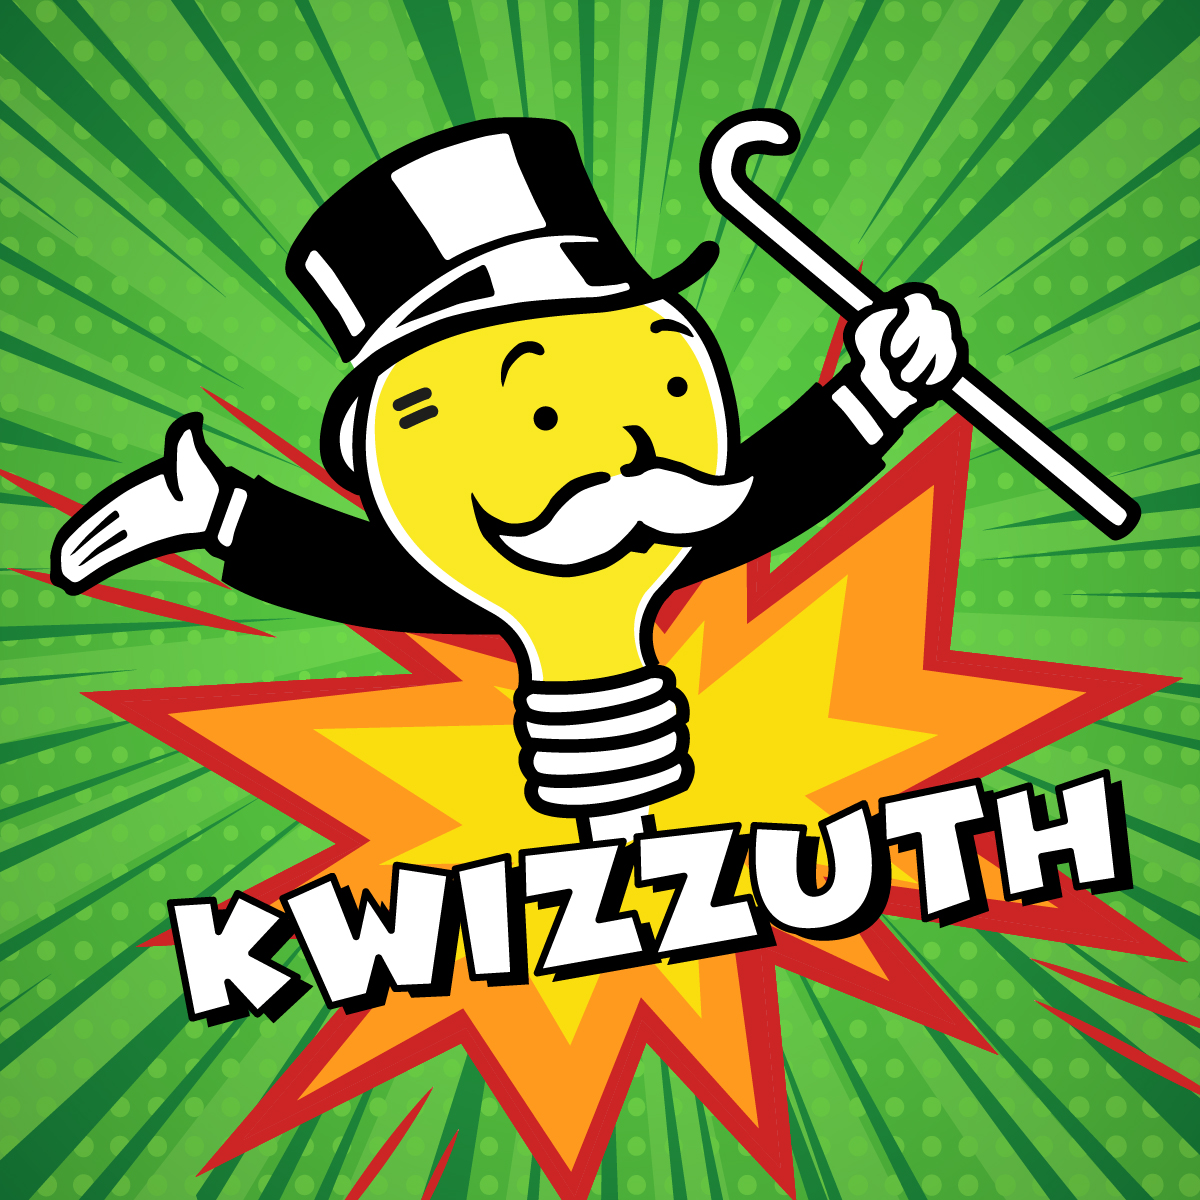 Kwizzuth monopoly Millus